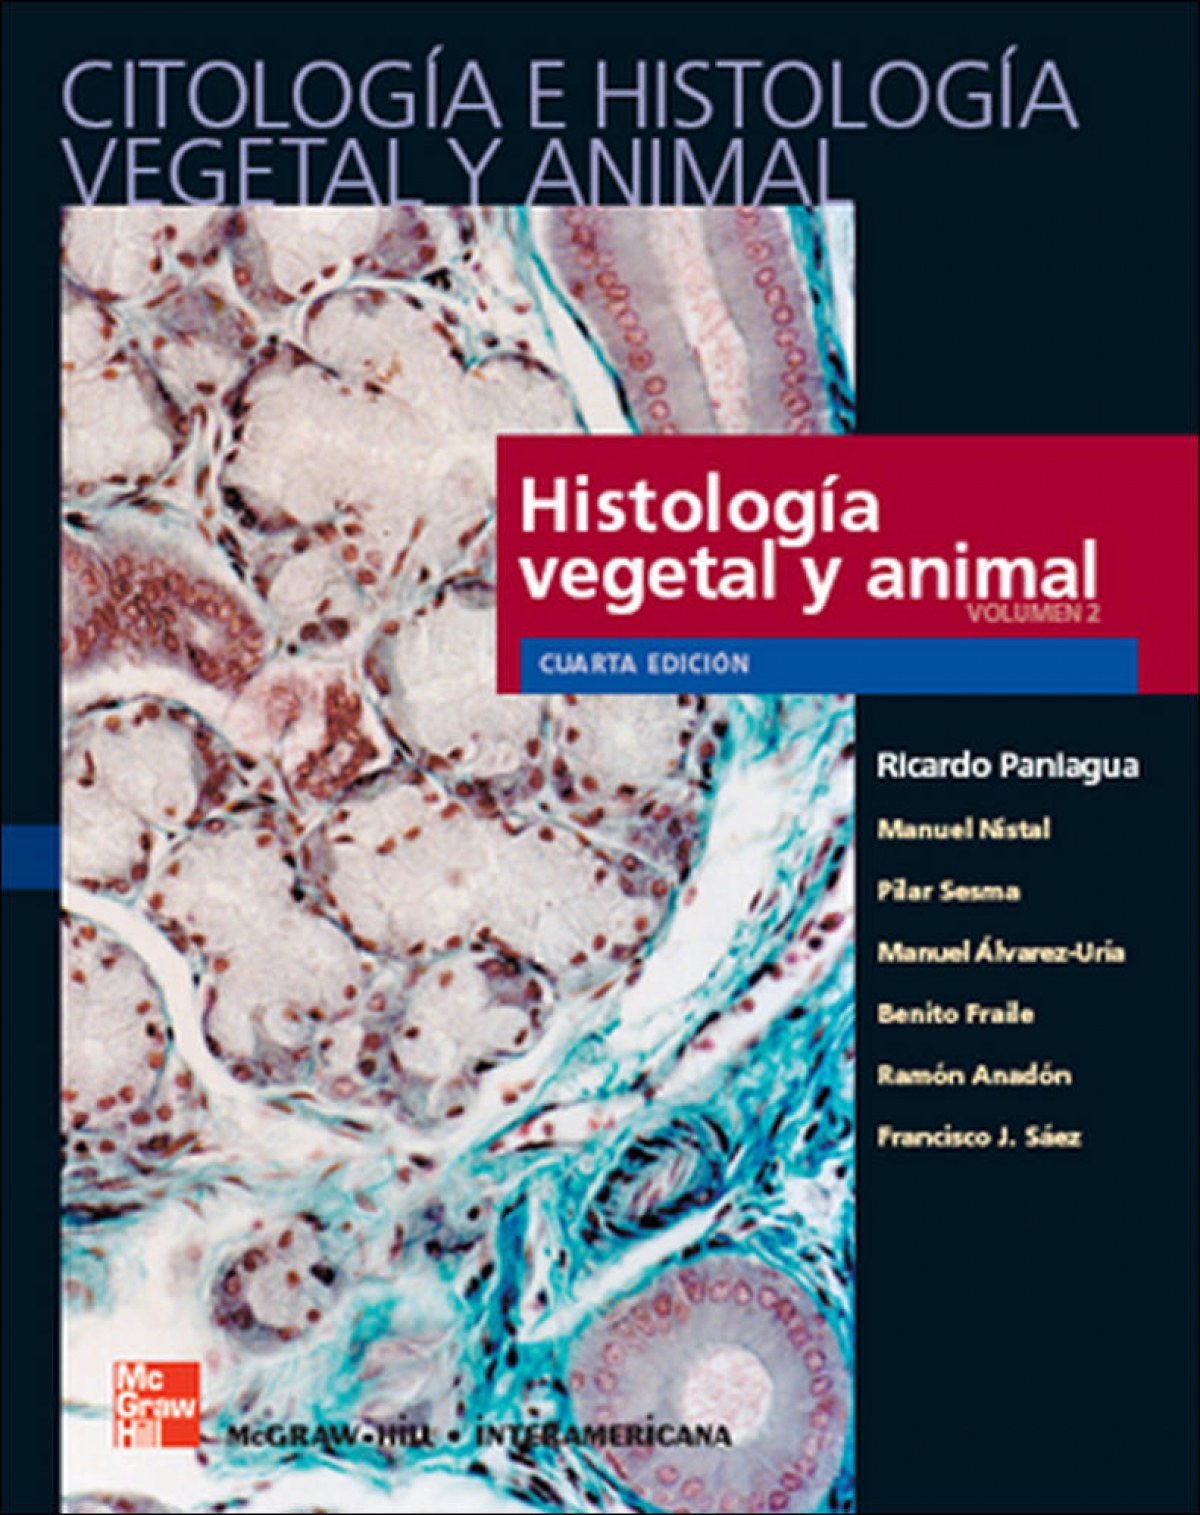 Citologia e histologia vegetal y animal.(2 vol.)4a.edic. - Paniagua